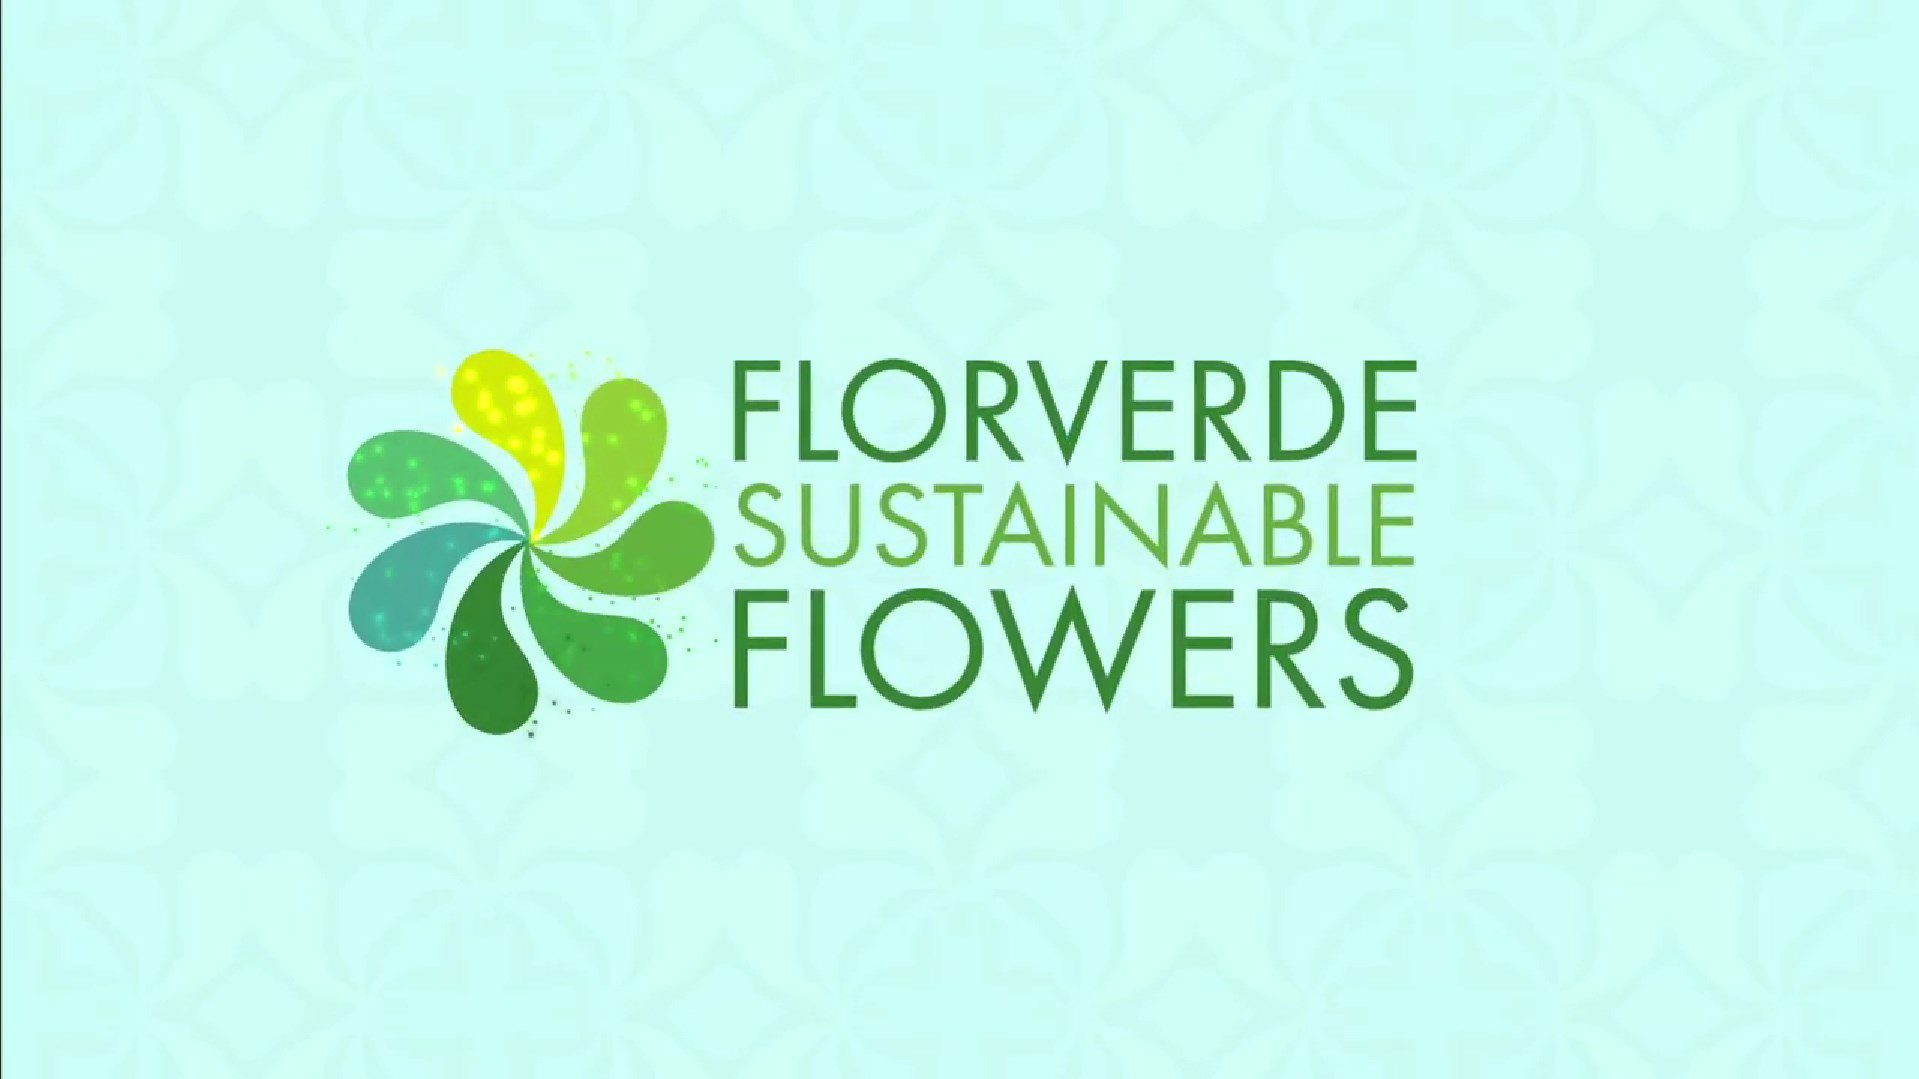 Florverde Sustainable Flowers leader in the evolution of the FSI Basket of Standards 2020